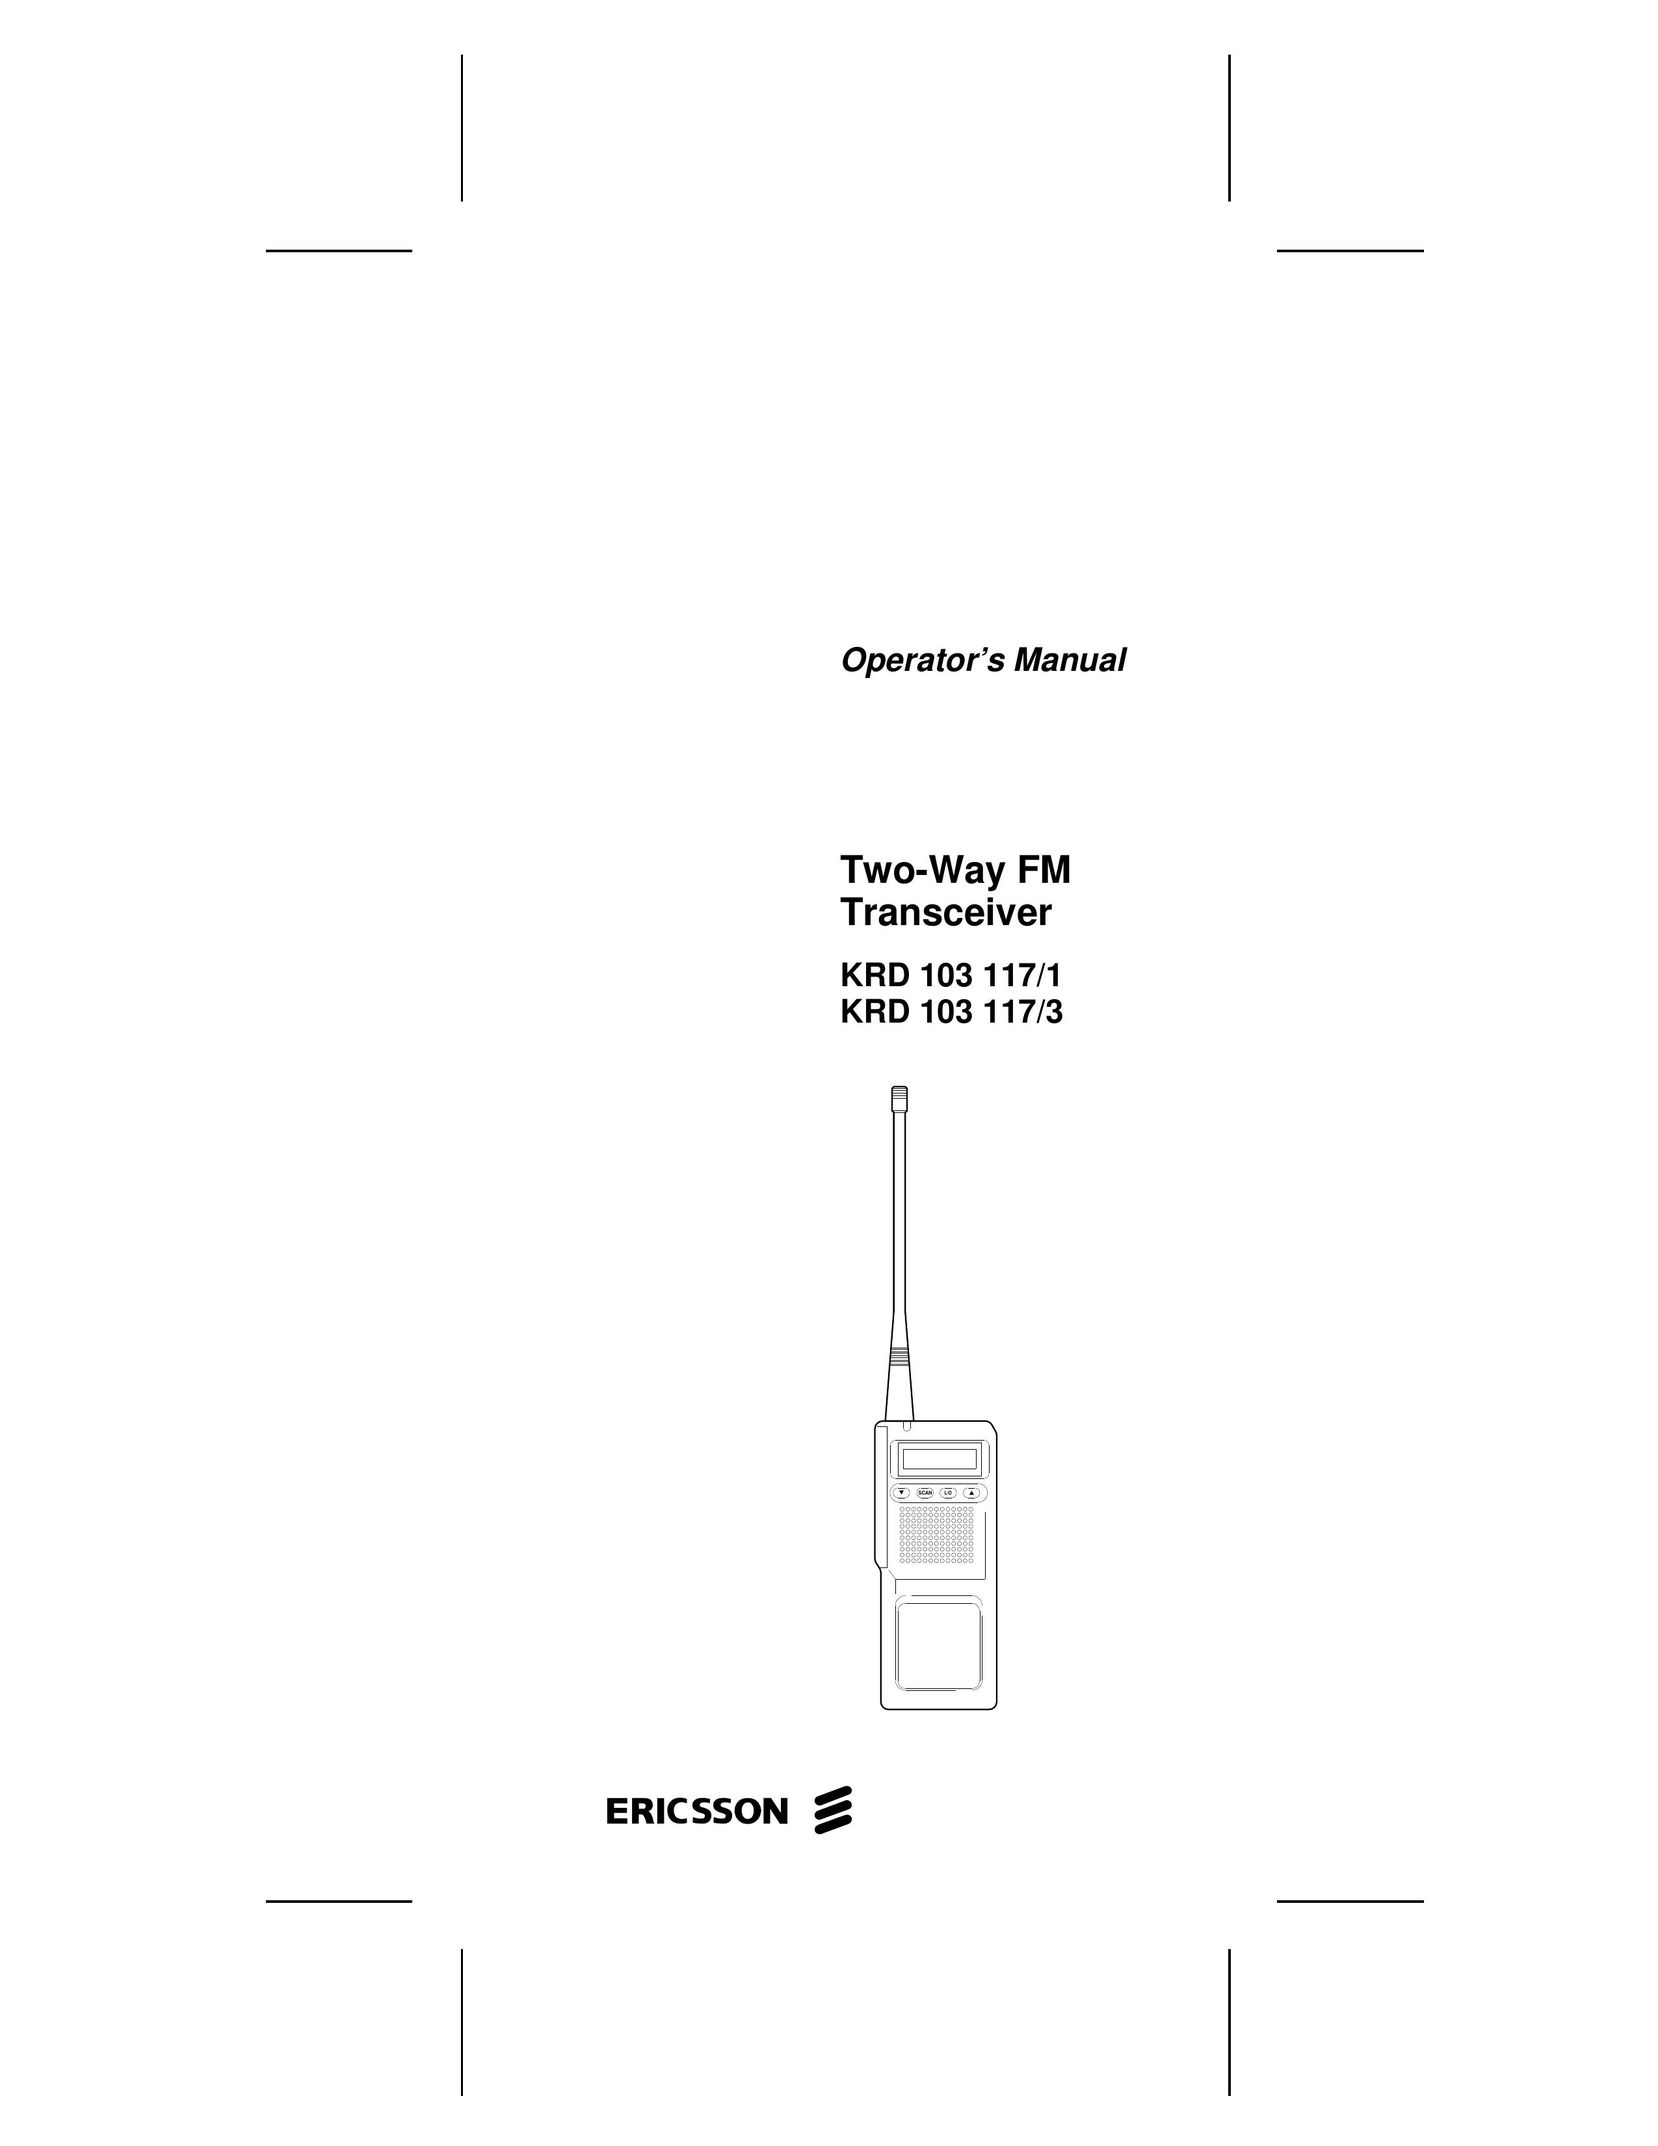 Ericsson KRD 103 117/3 Two-Way Radio User Manual